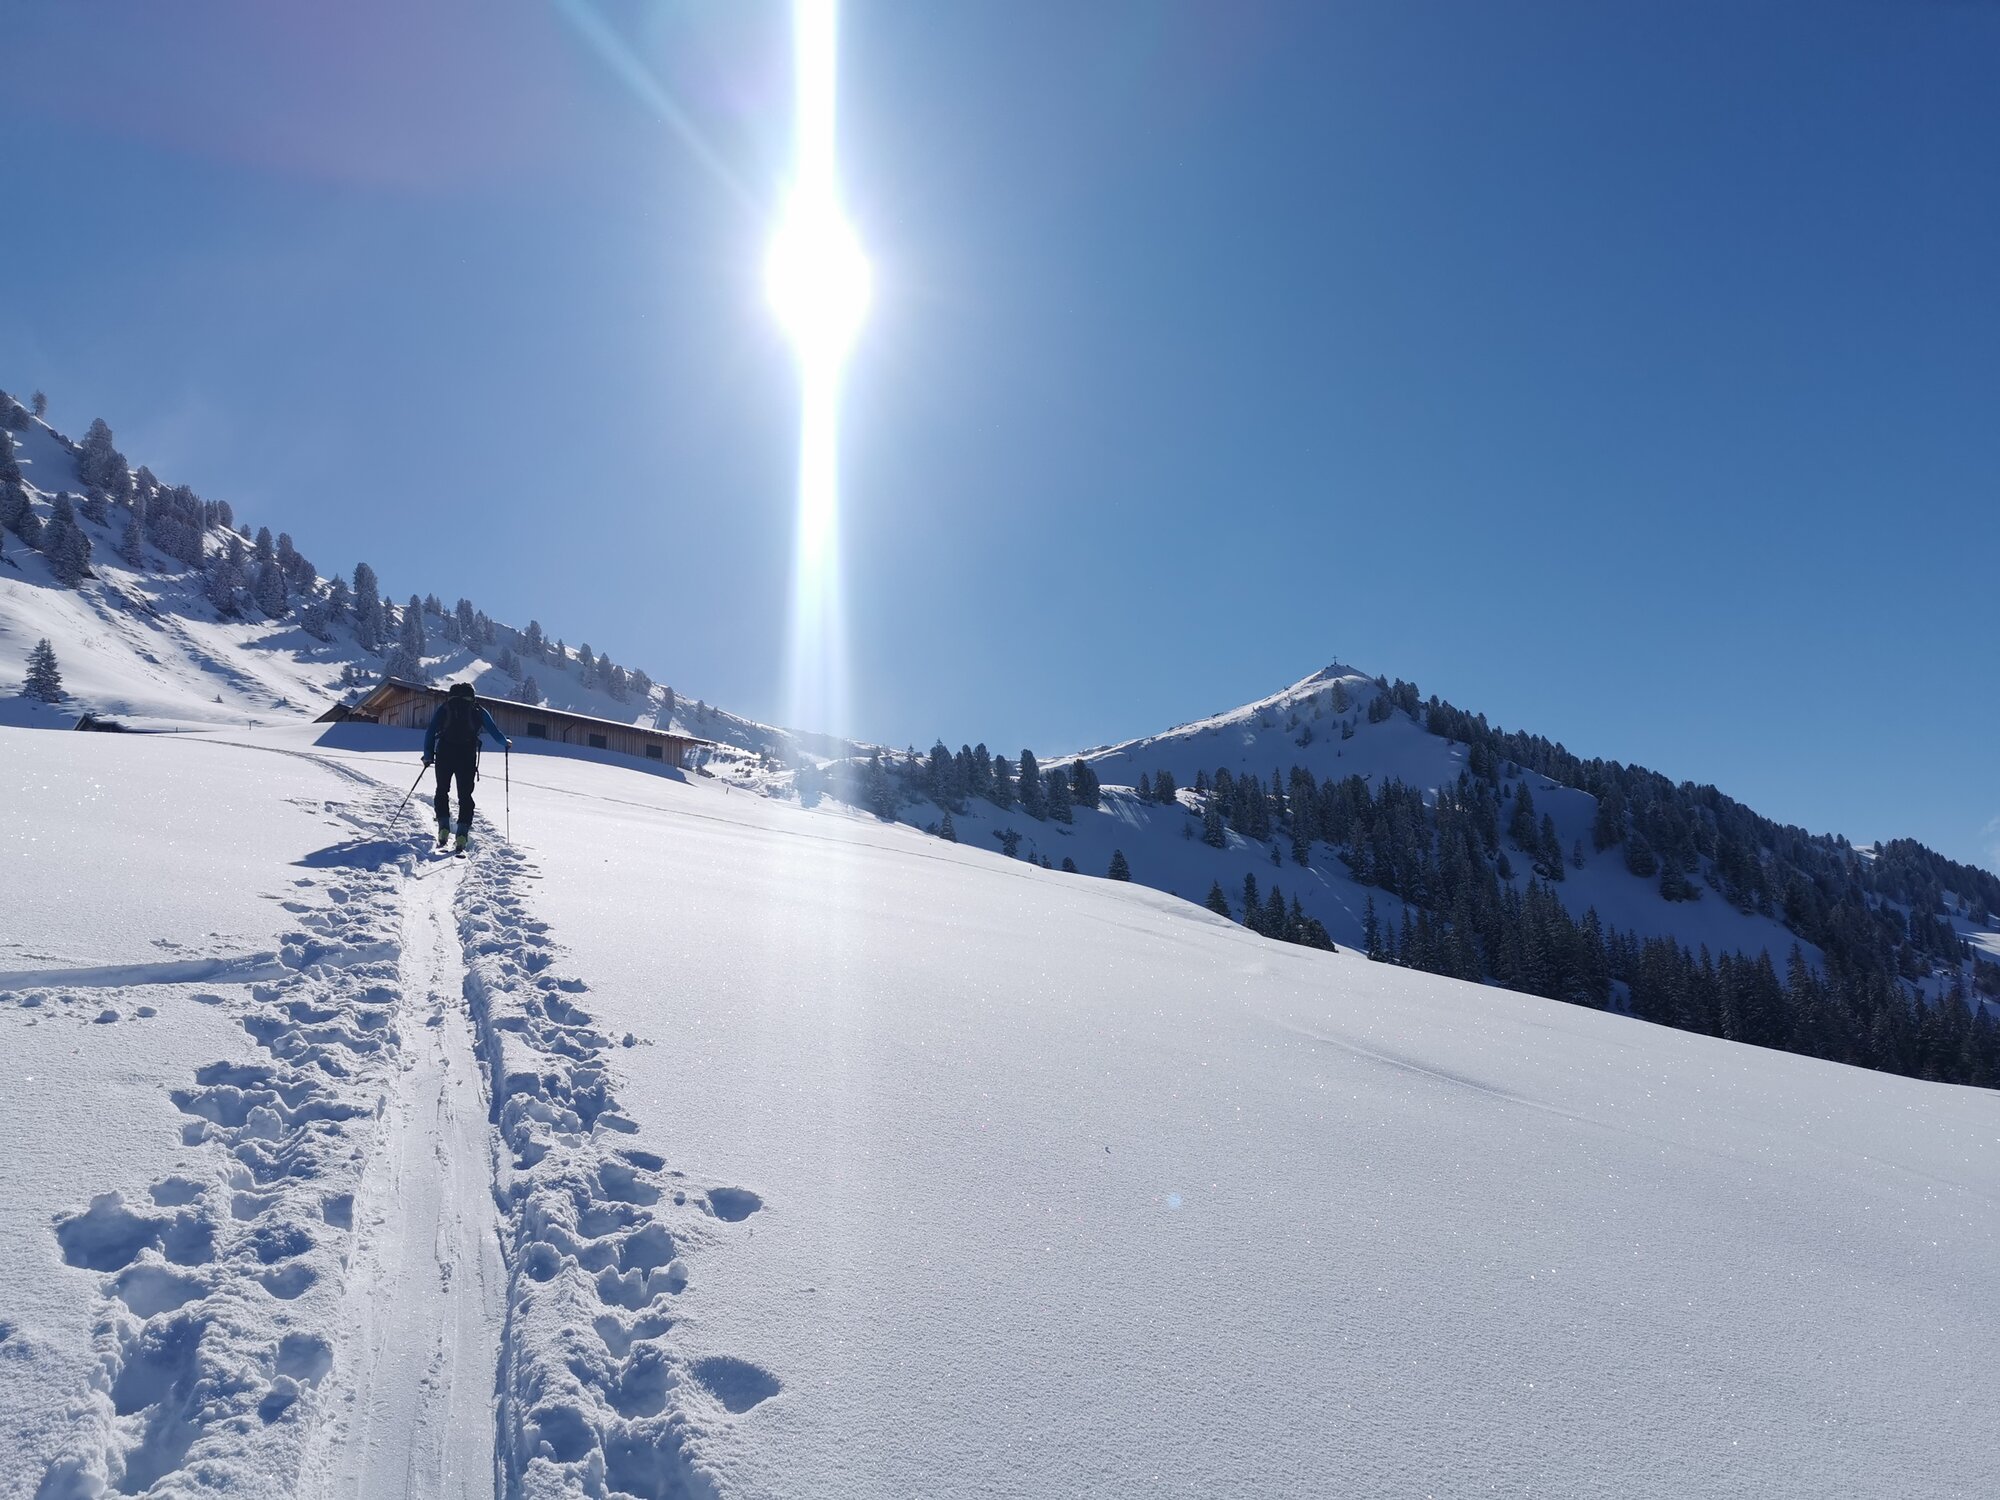 Tourers follow a trail through a deep snow slope towards the summit in bright sunshine. © C. Silberberger, Wildschönau Tourism 